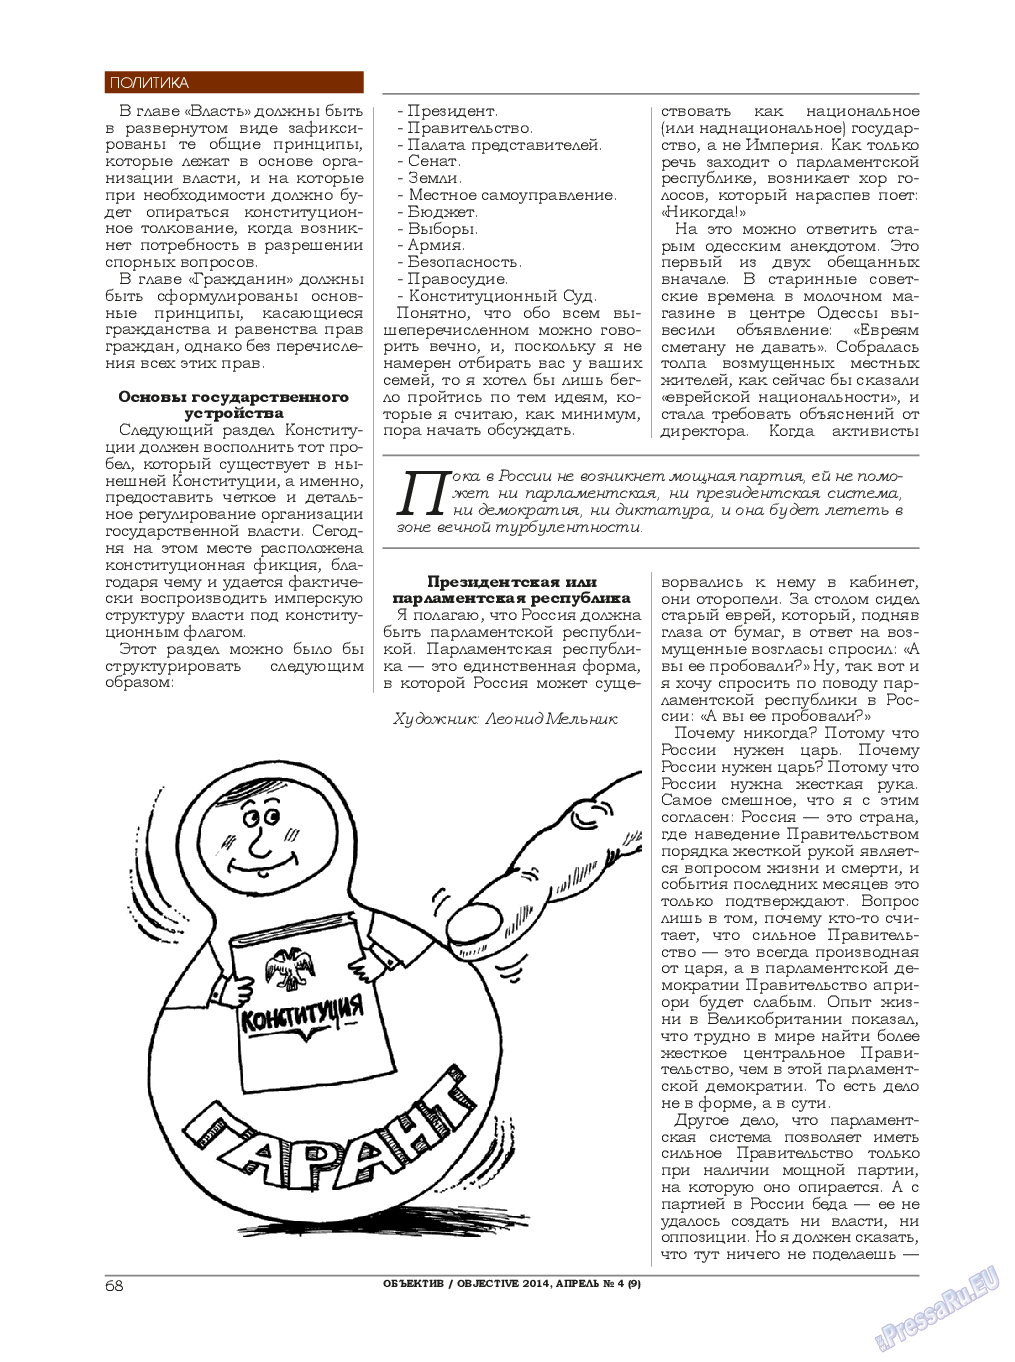 Объектив EU, журнал. 2014 №4 стр.68